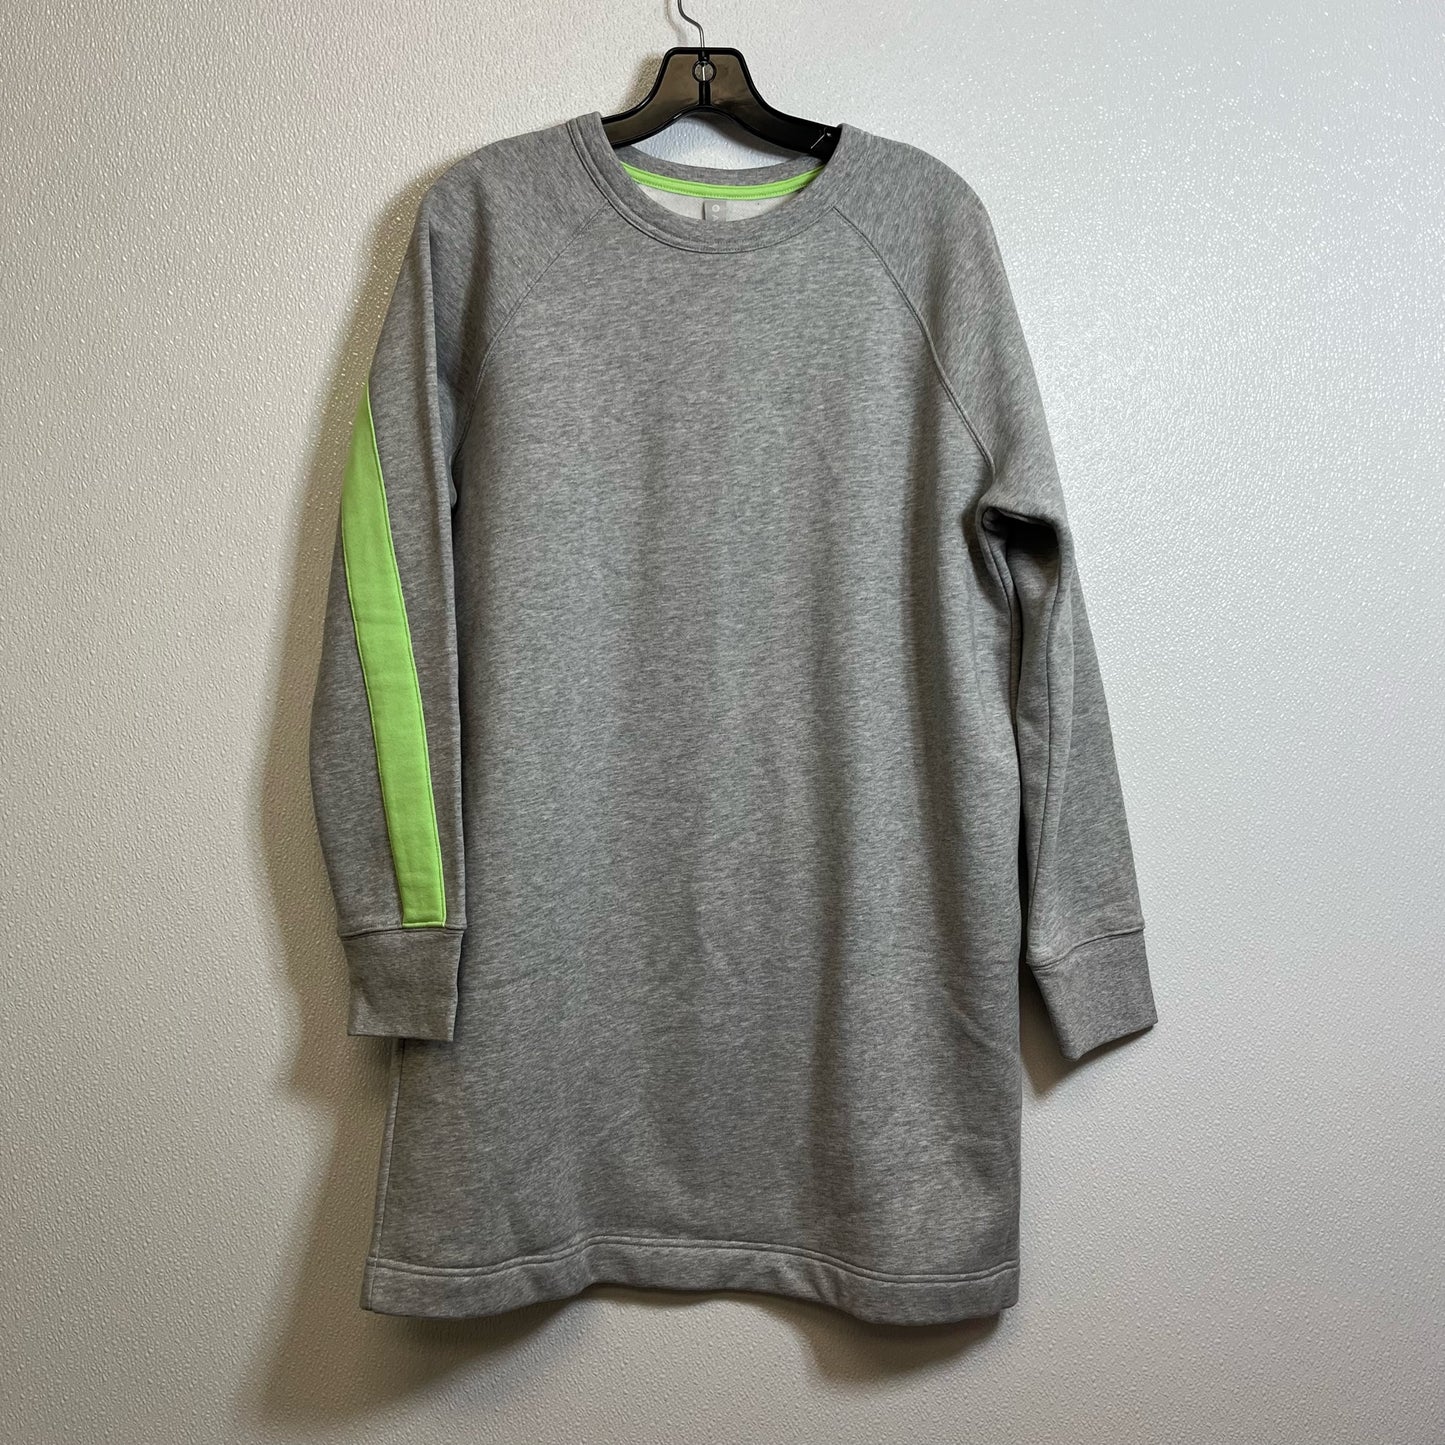 Athletic Sweatshirt Crewneck By Athleta  Size: M